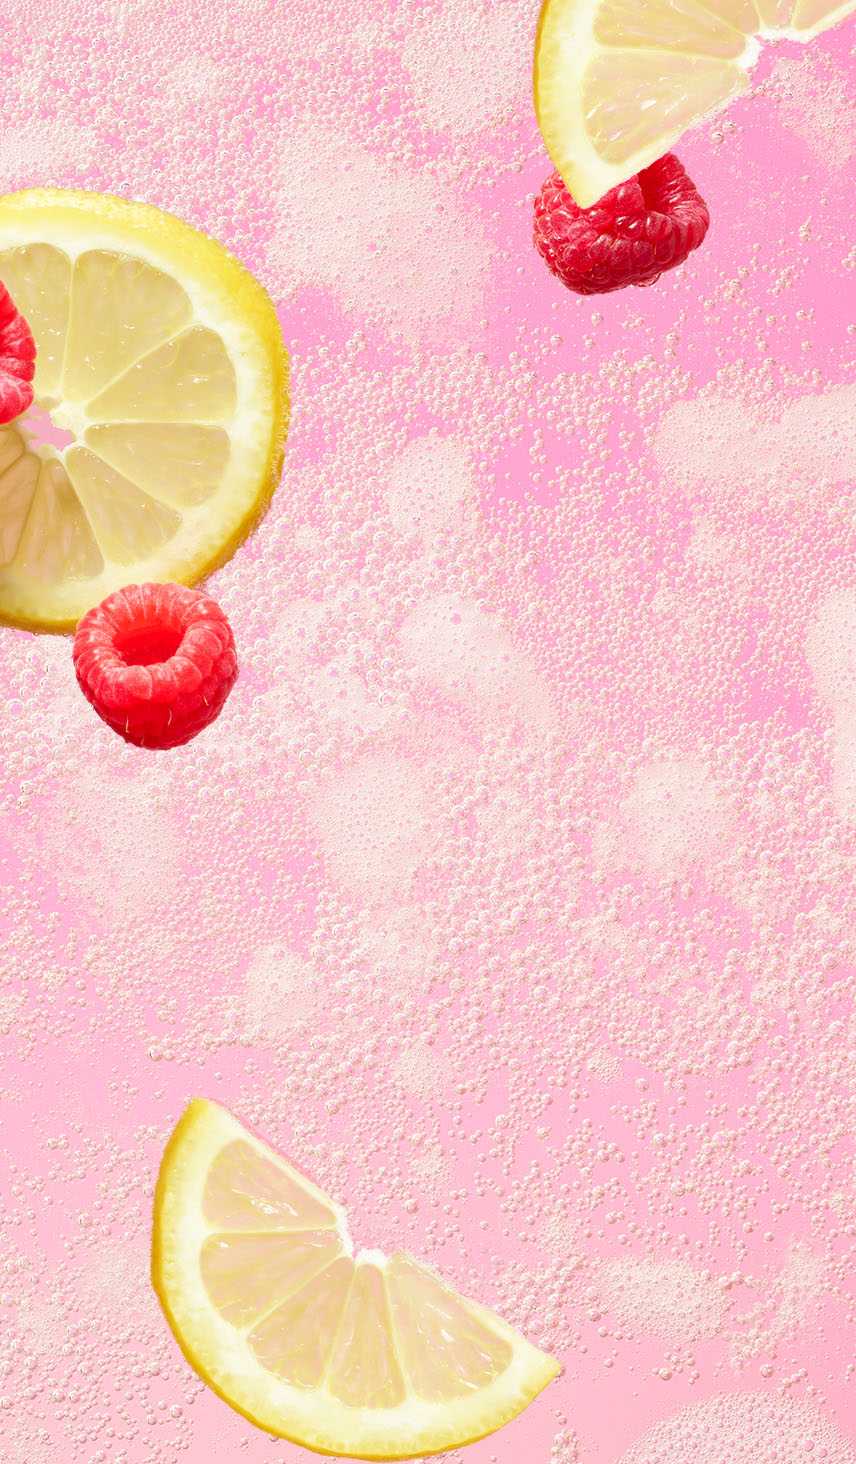 Remedy Kombucha Raspberry Lemonade Flavor